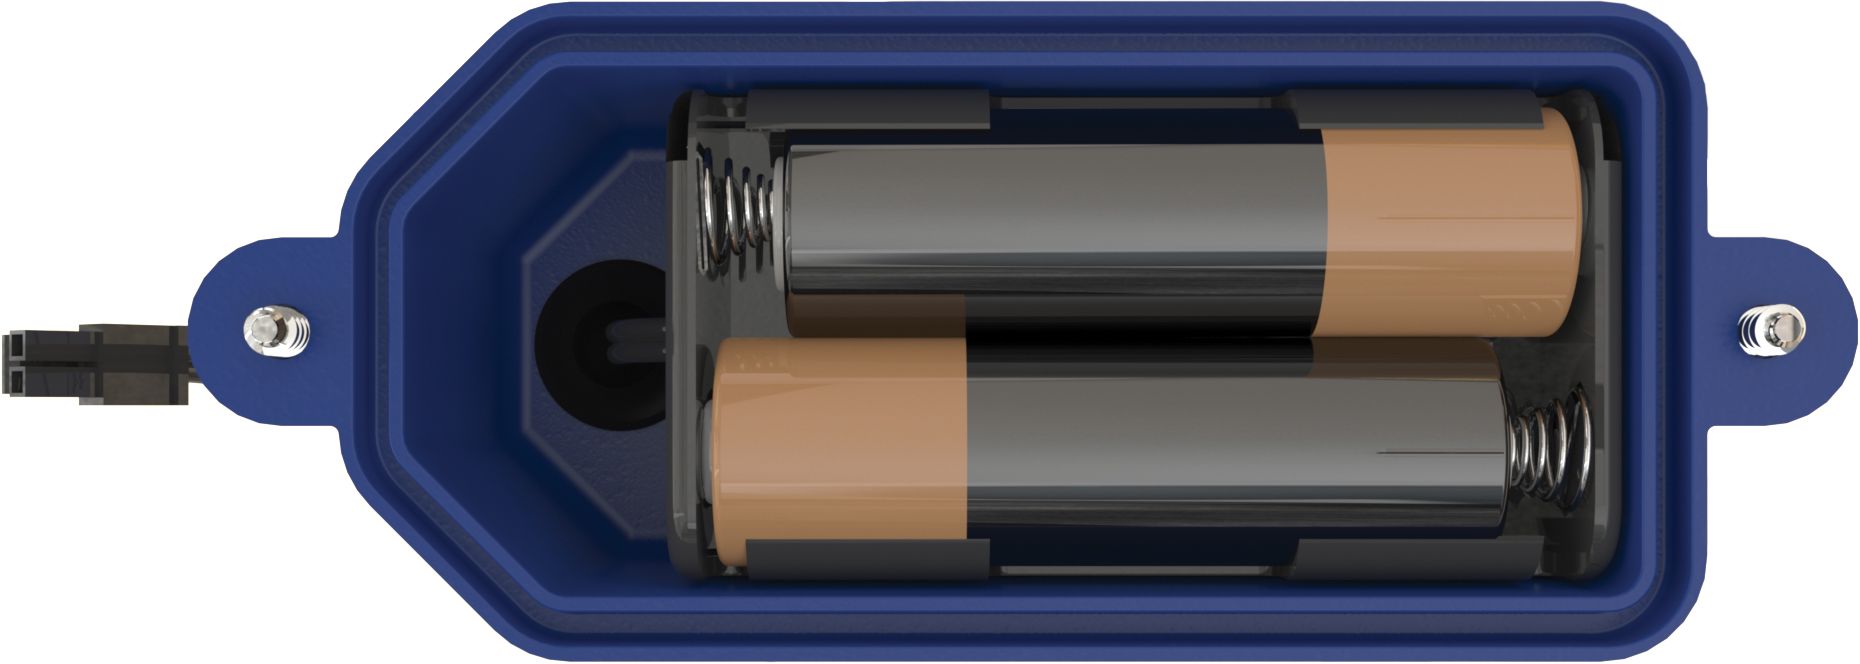 WISA Tronic Batterij module voor Eos/Nea/Ion/Kation bedieningspanelen